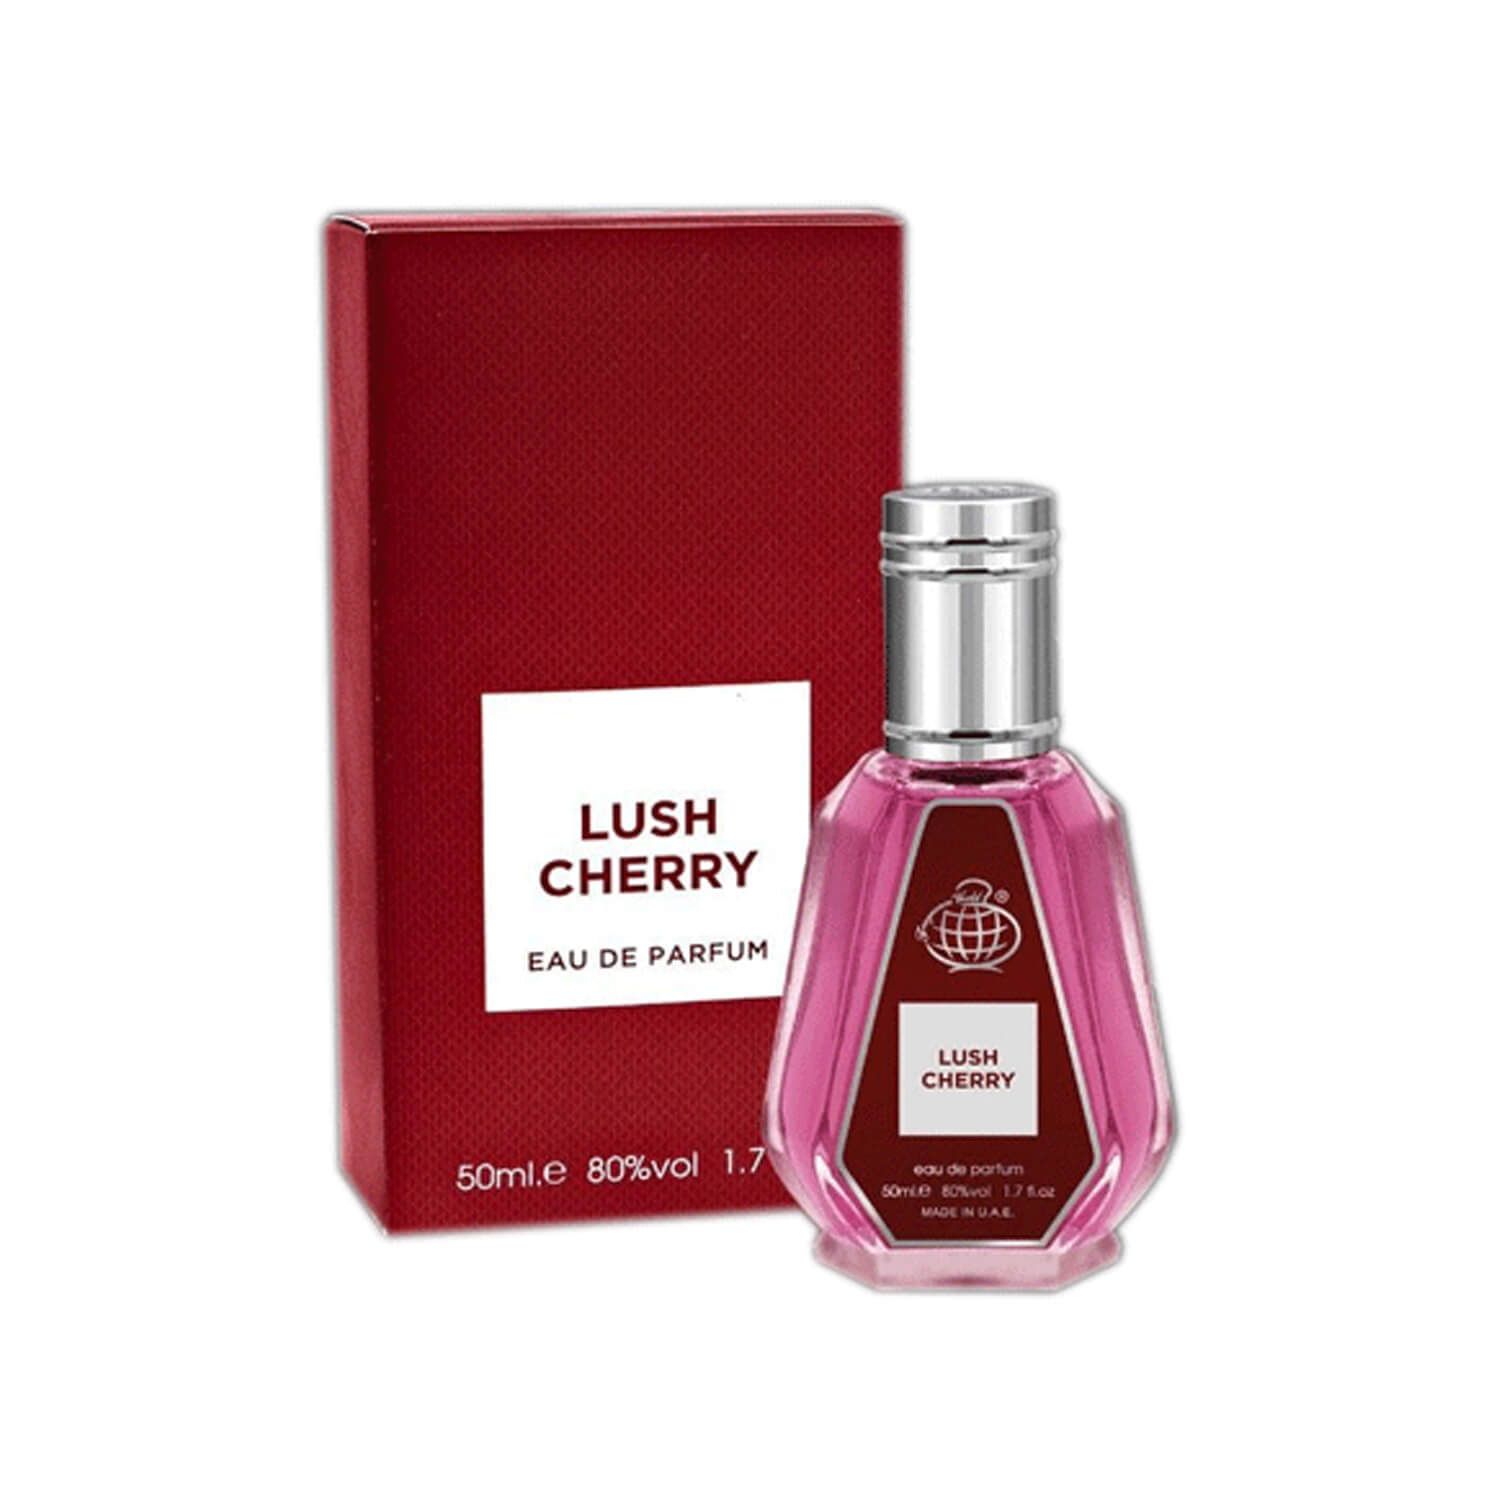 ادو پرفیوم فراگرنس ورد مدل Lush Cherry حجم 50 میلی لیتر